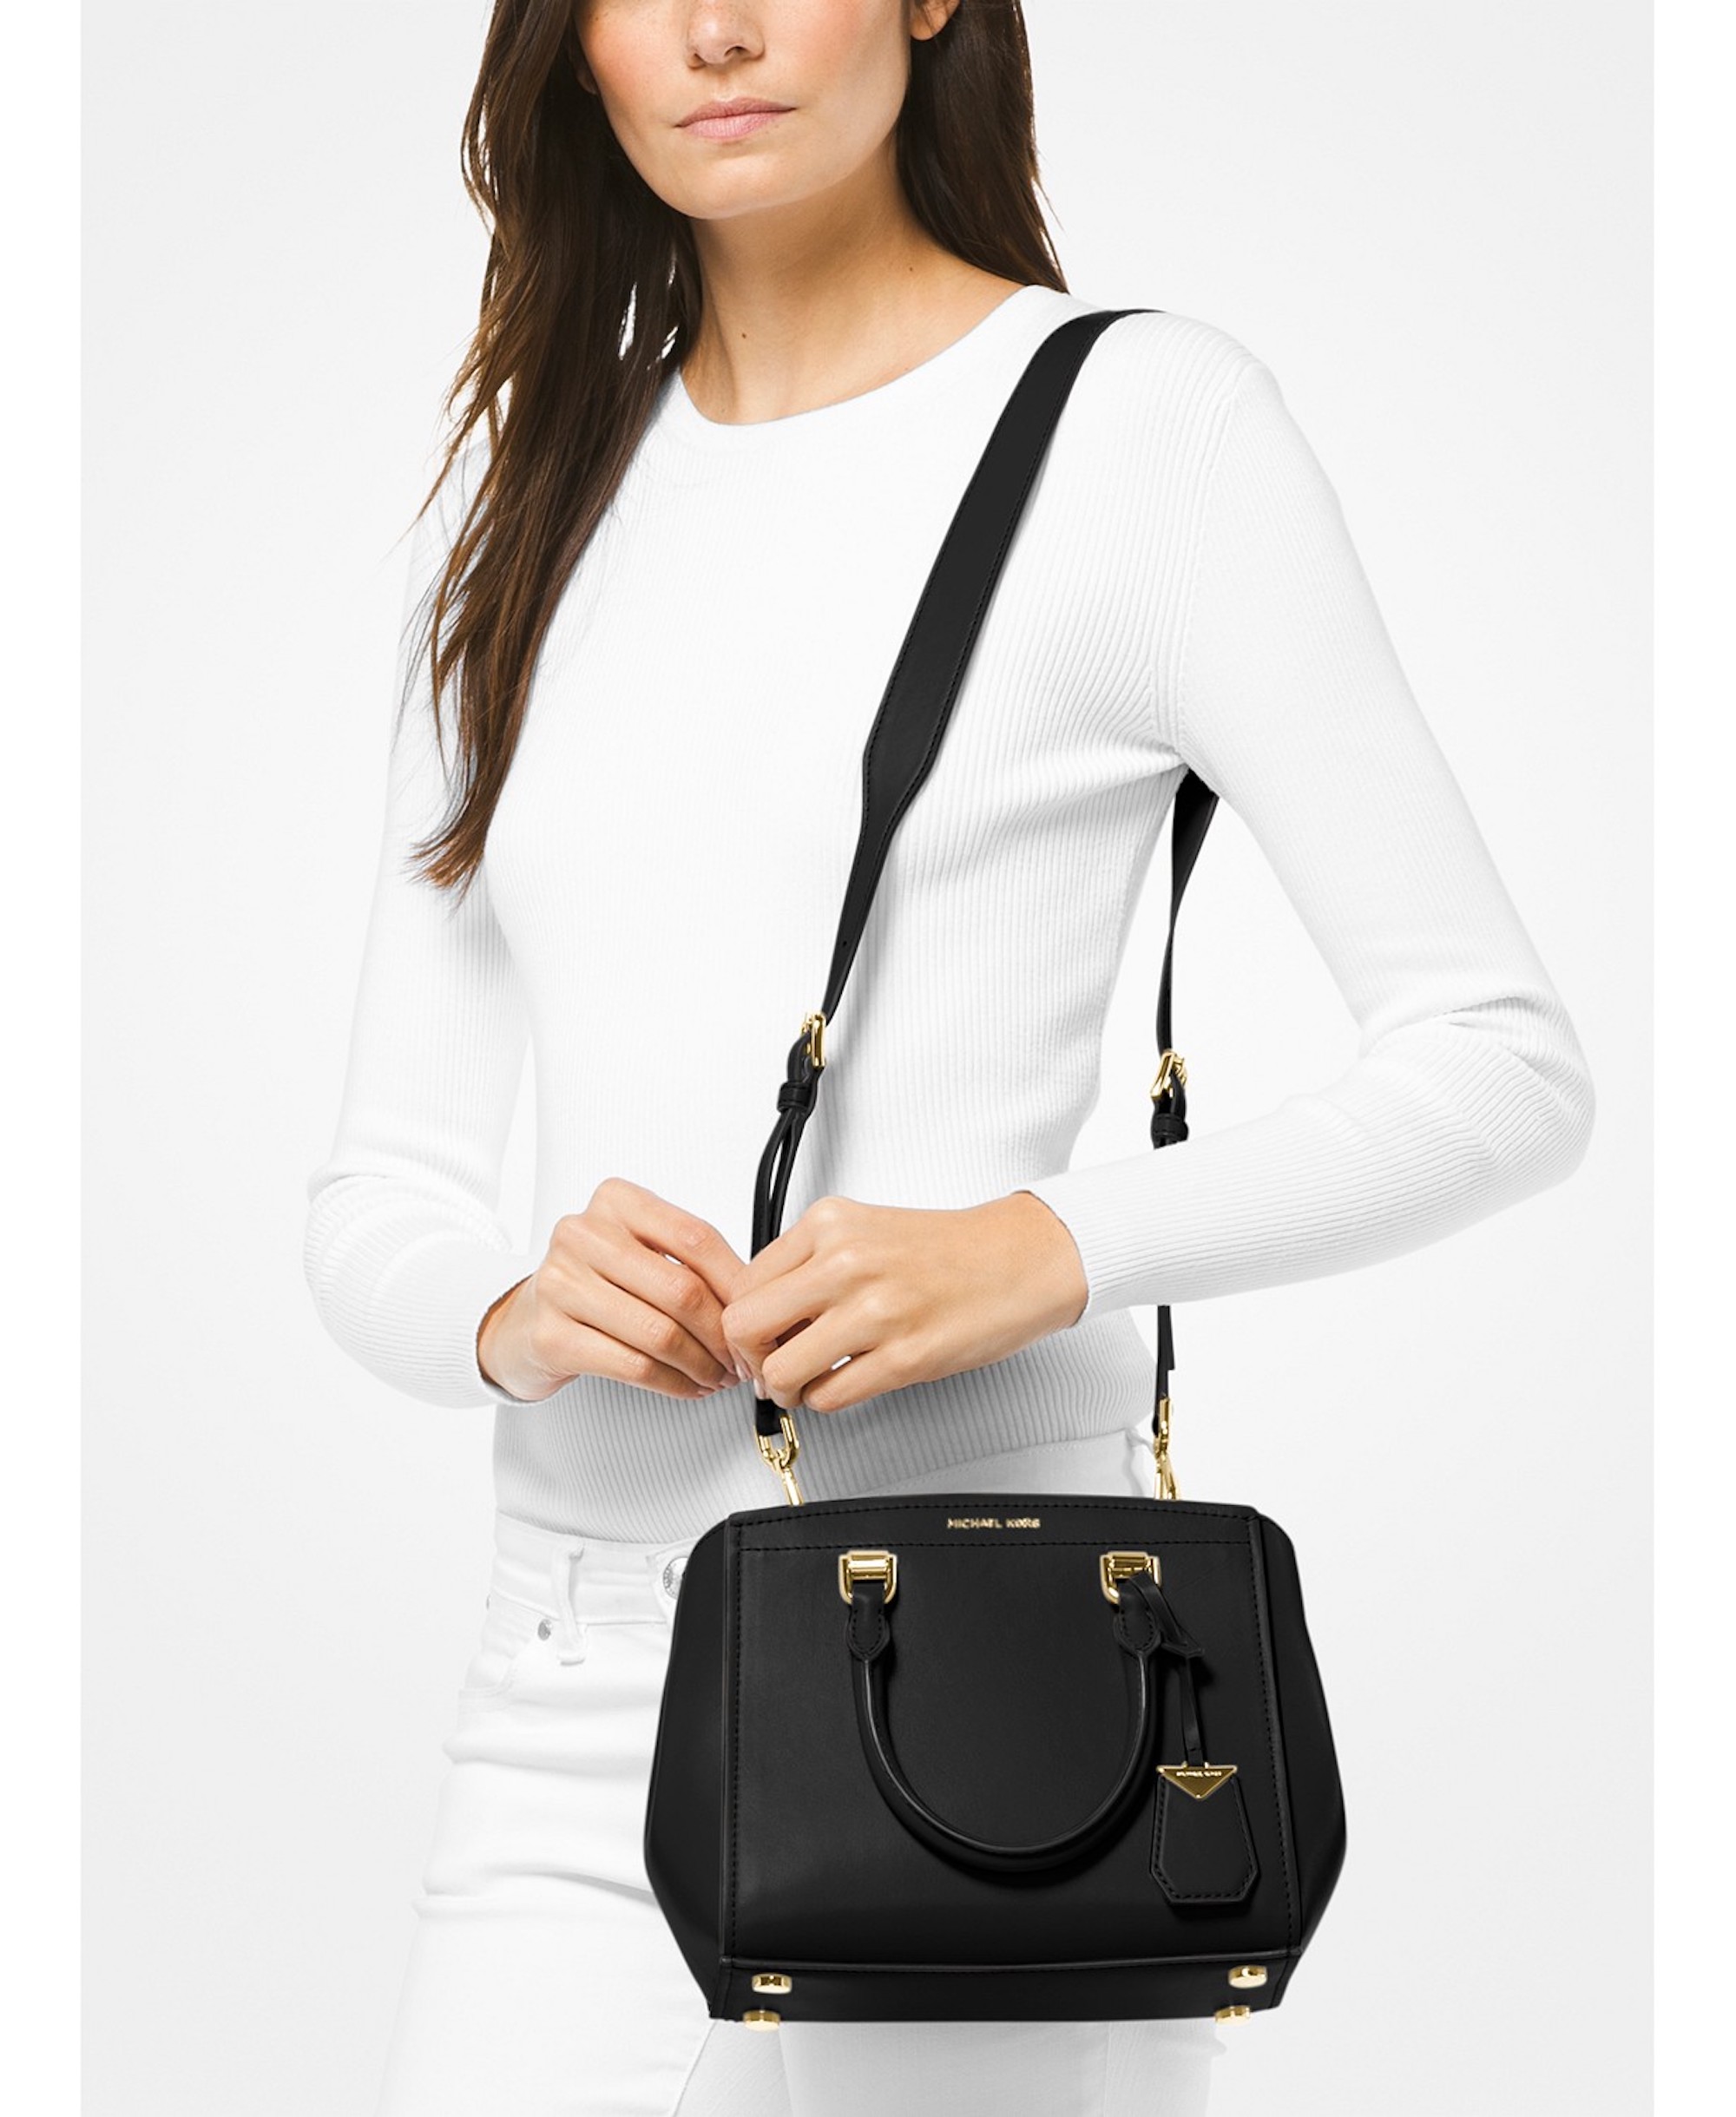 michael kors nylon tote Purse Bag Handbag purchased macys | eBay